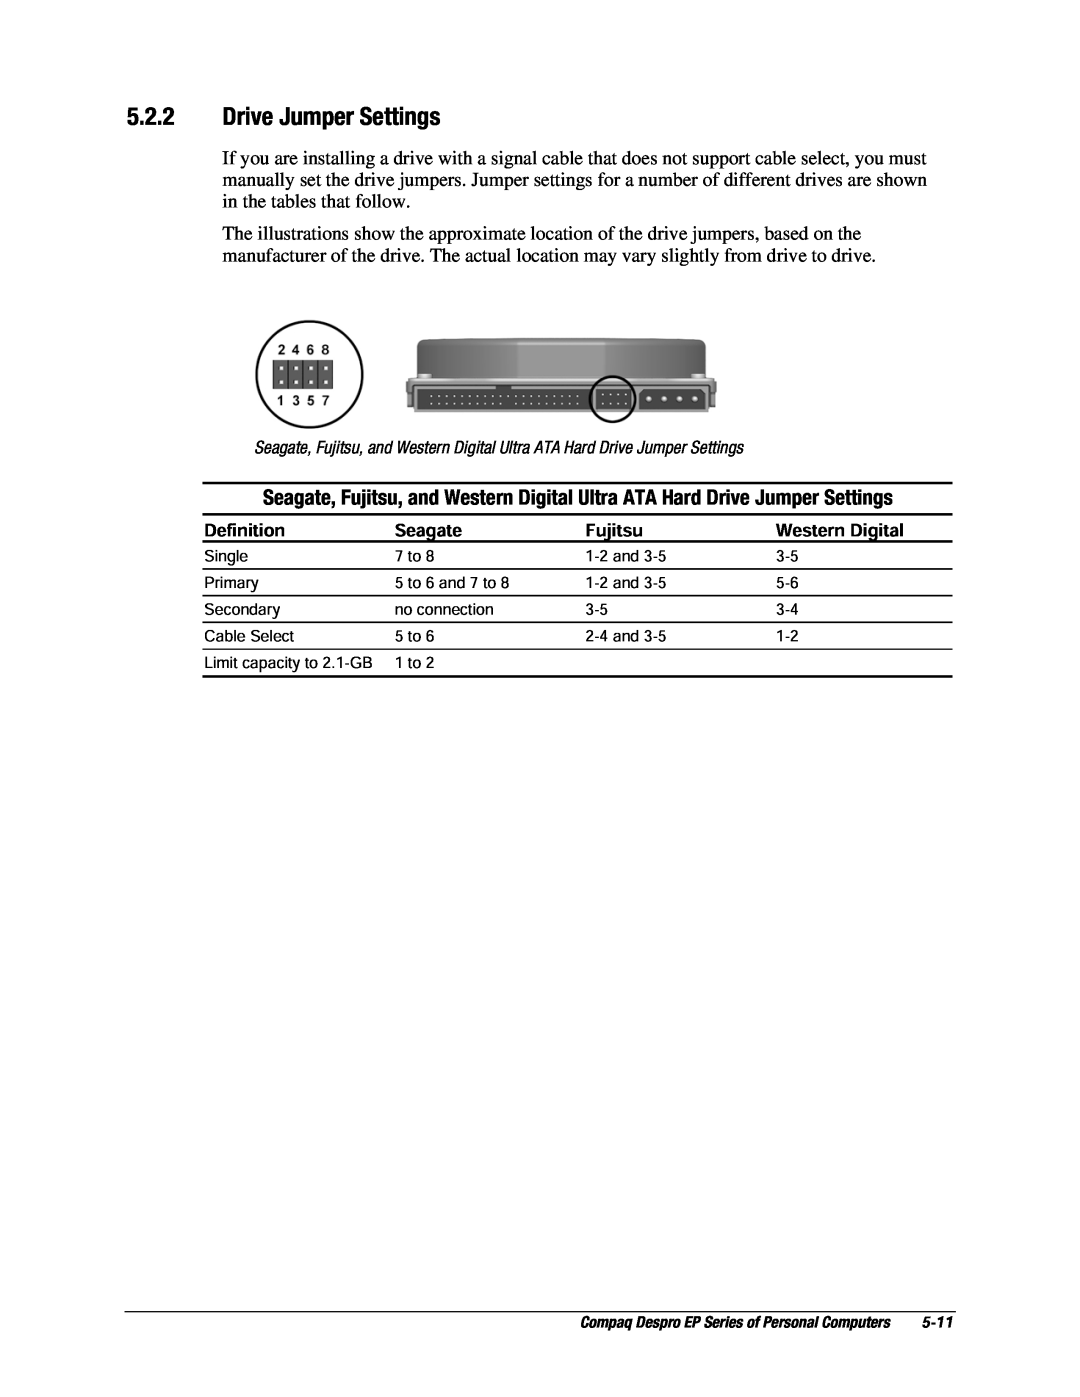 Compaq EP Series manual Drive Jumper Settings, Definition, Seagate, Fujitsu, Western Digital 